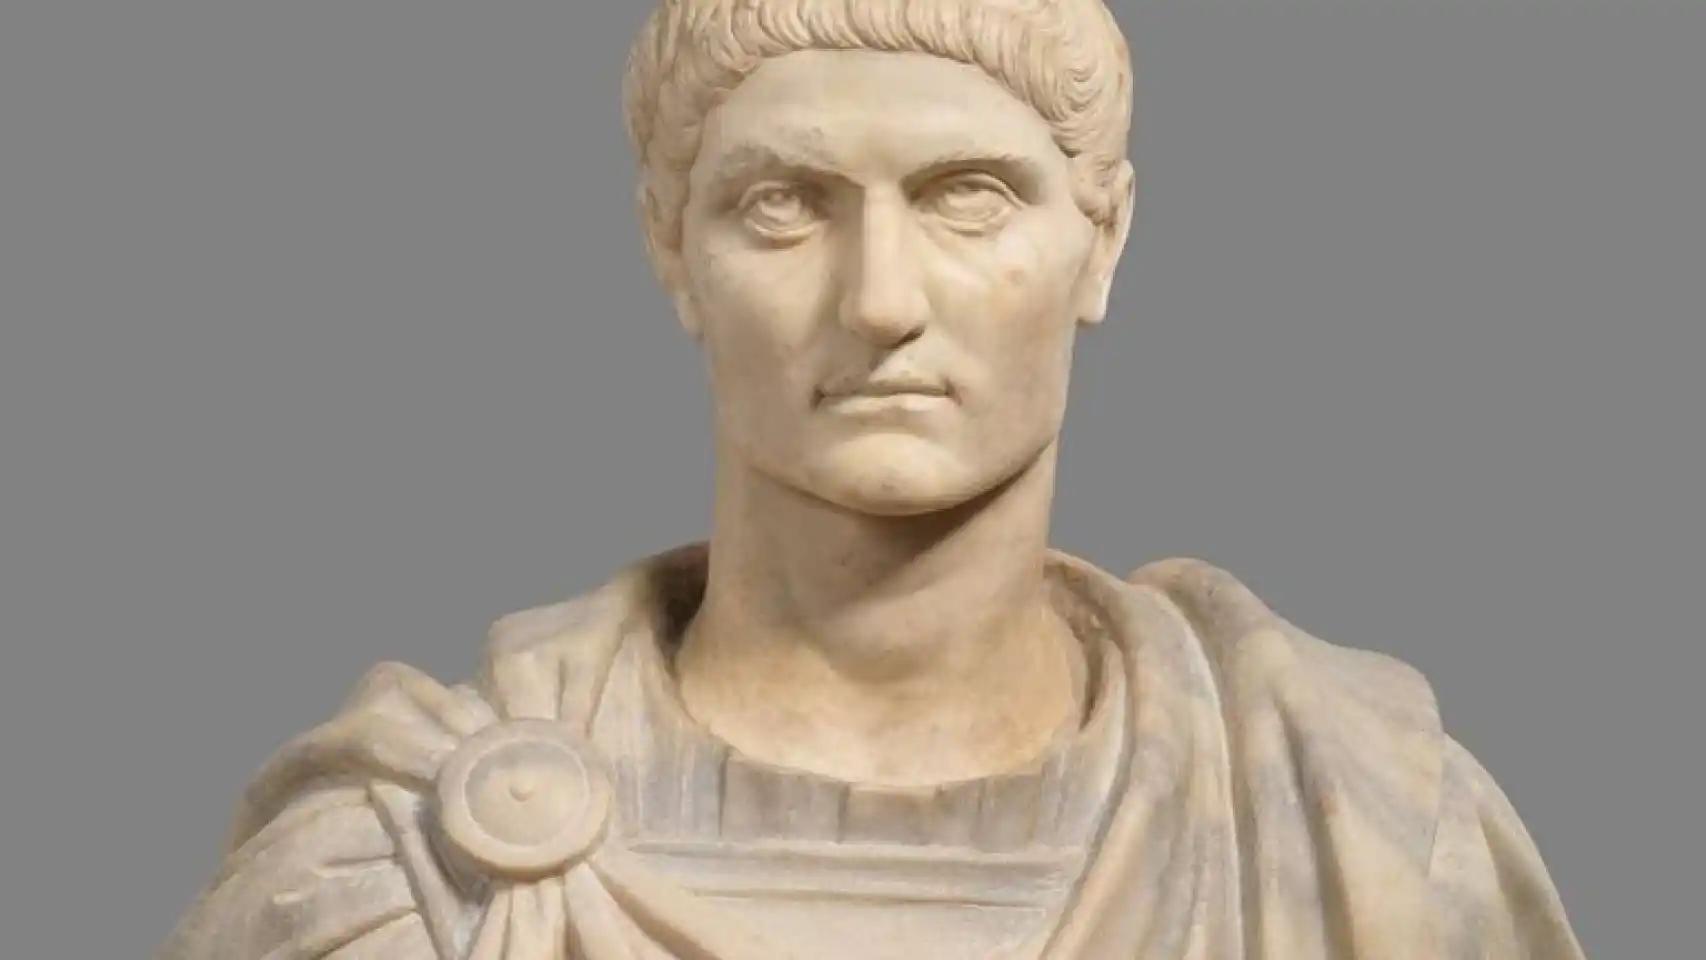 constantino emperador romano biografia resumida - Quién fue el emperador Constantino resumen